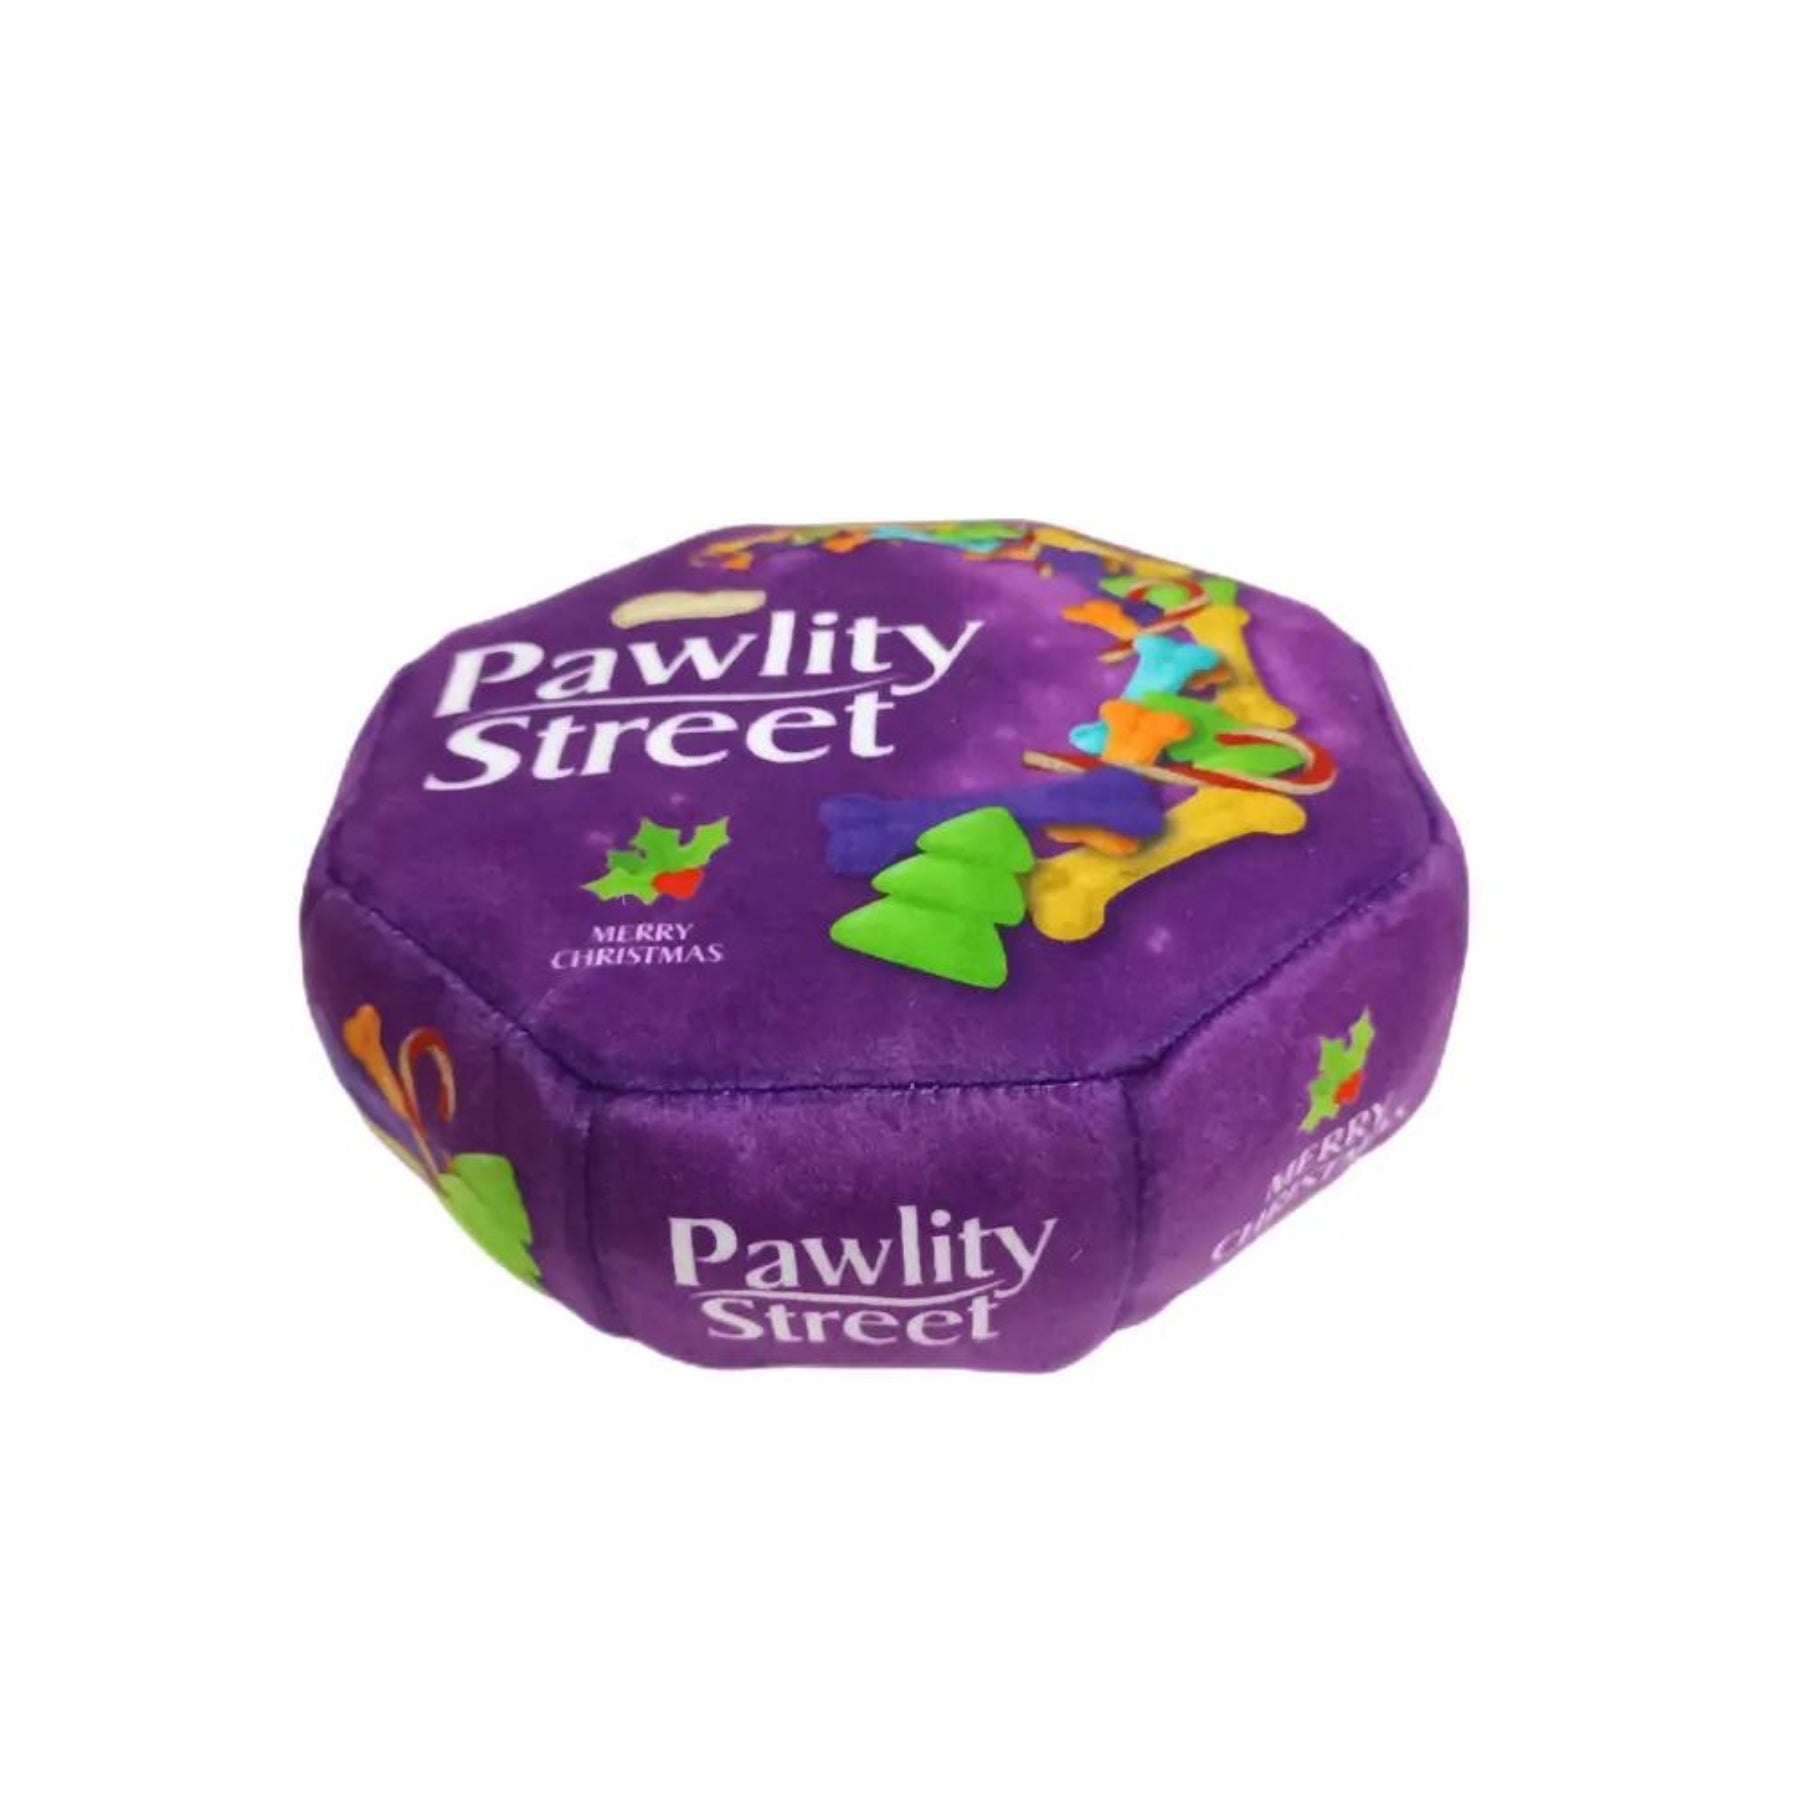 Pawlity Street Tin Dog Toy - Pooch Luxury